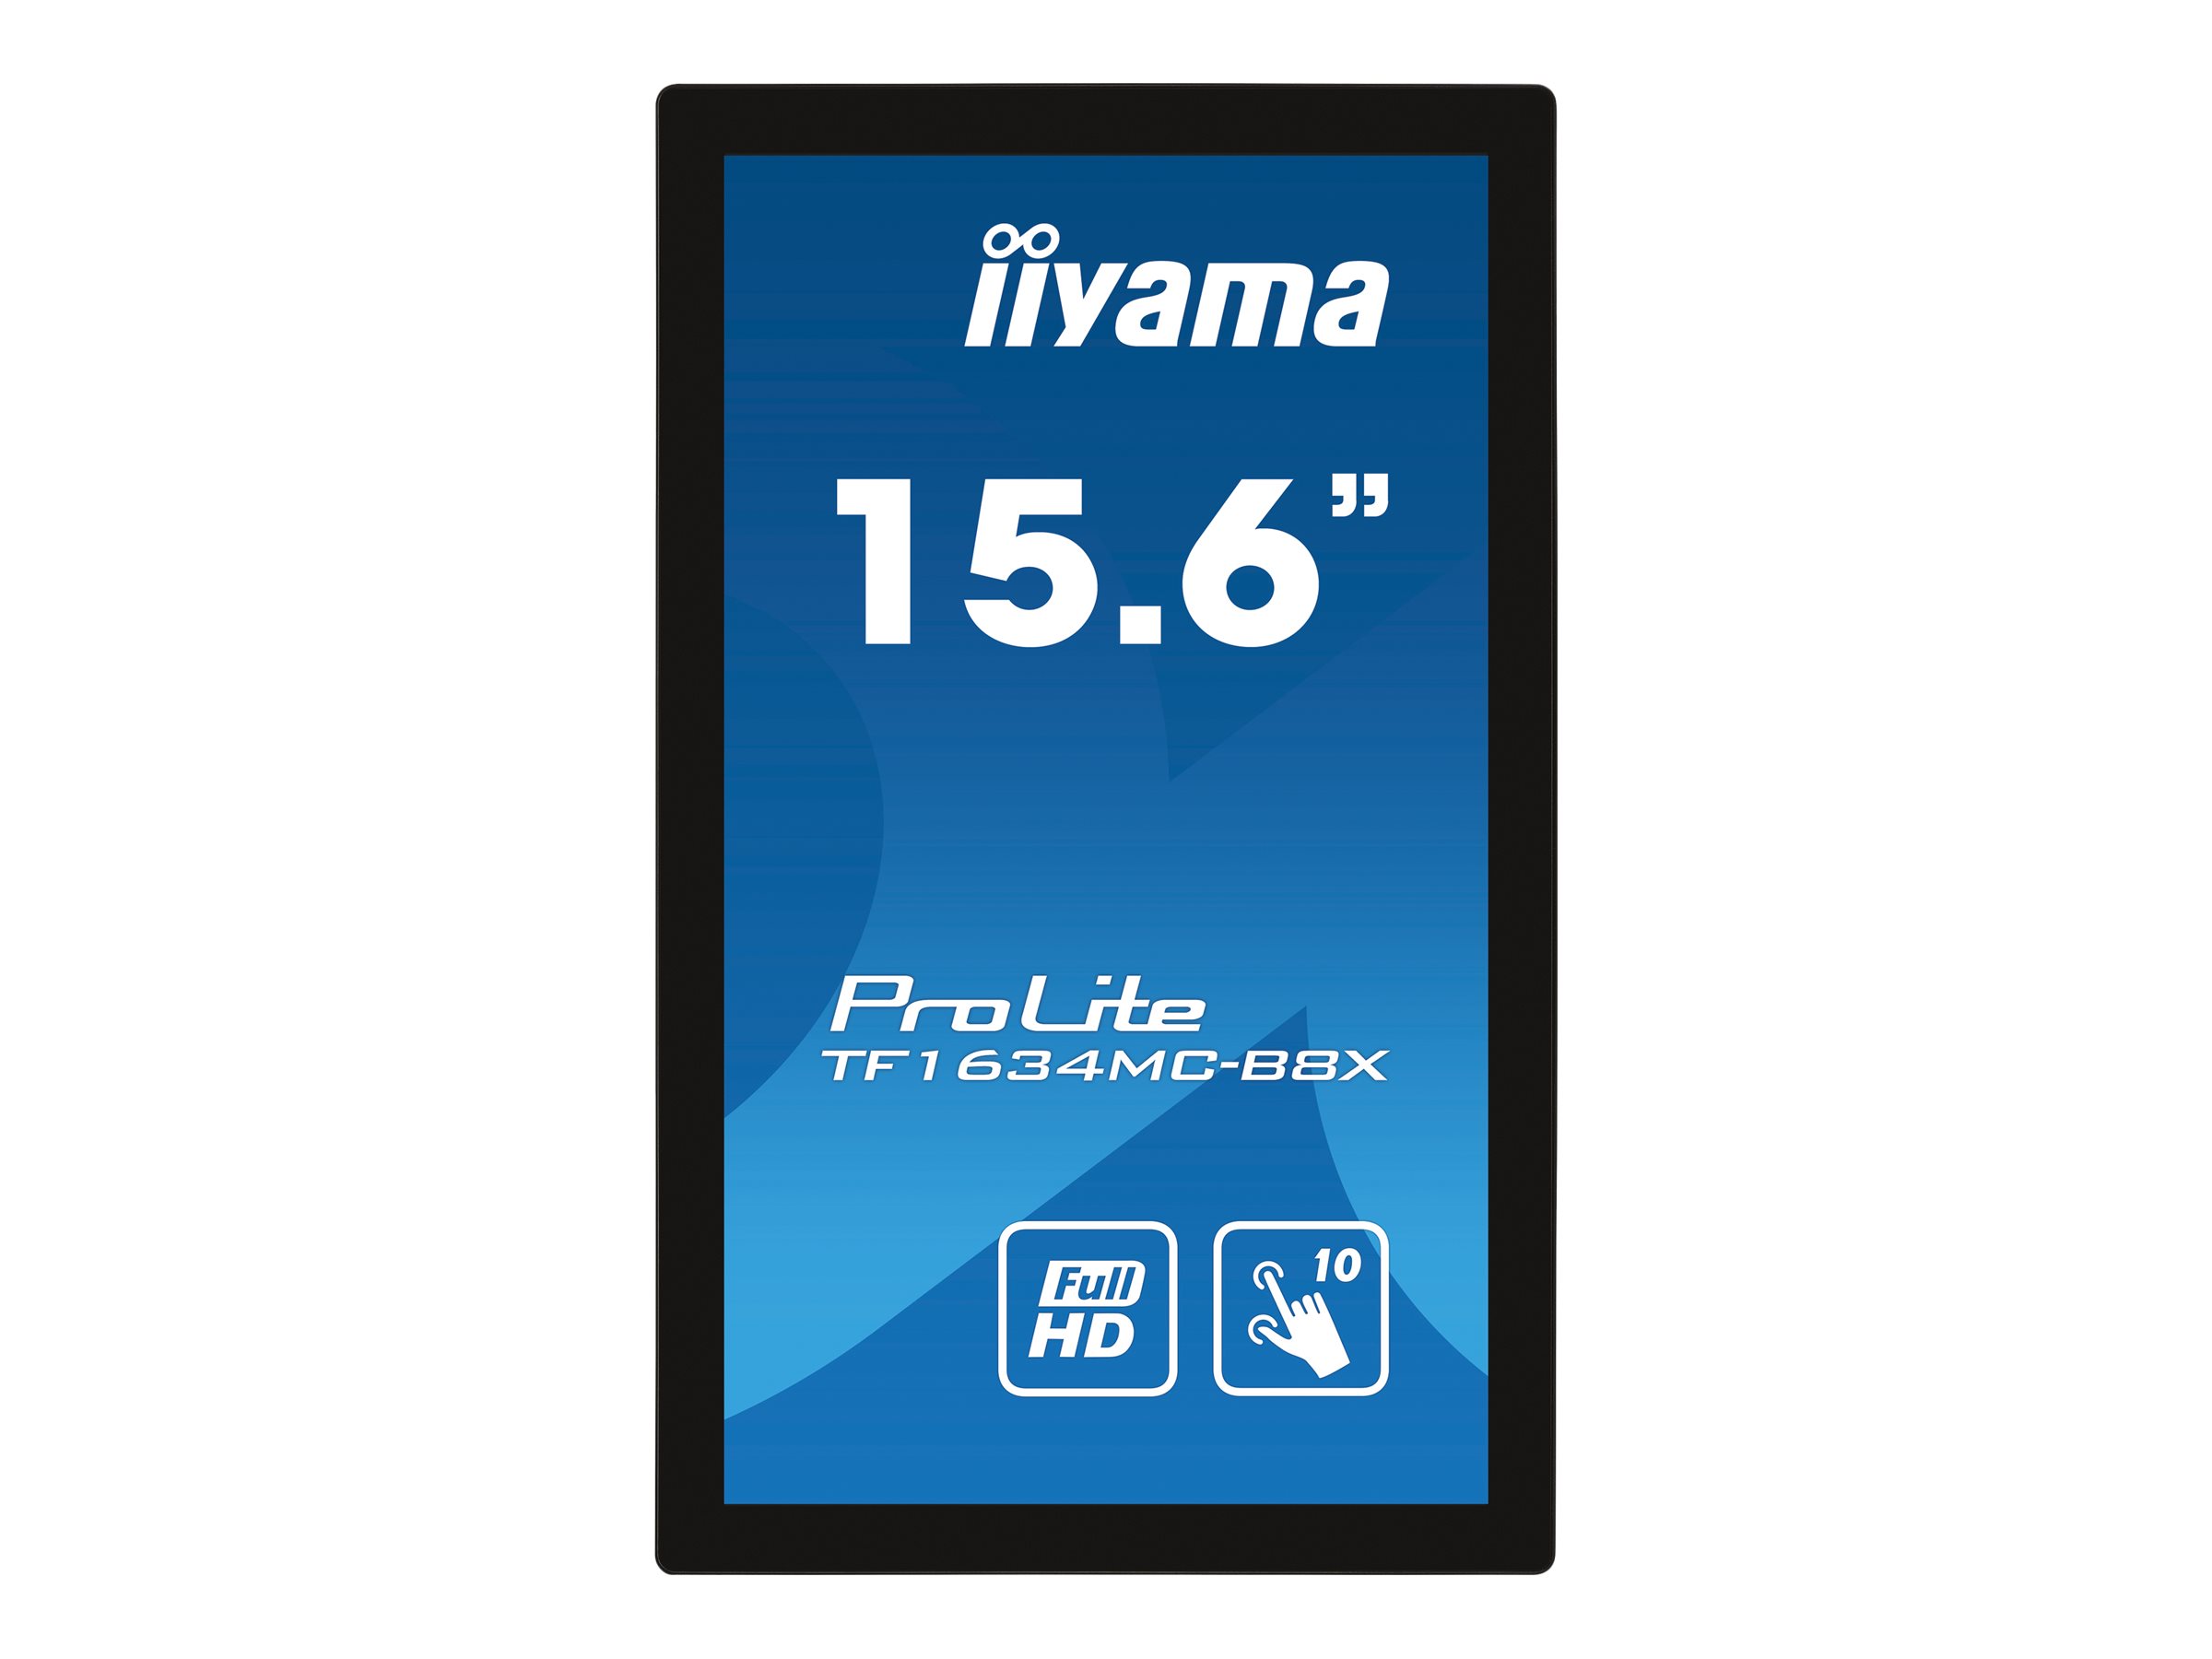 iiyama ProLite TF1634MC-B8X - LED-Monitor - 39.5 cm (15.6") - offener Rahmen - Touchscreen - 1920 x 1080 Full HD (1080p) @ 60 Hz - IPS - 450 cd/m² - 700:1 - 25 ms - HDMI, VGA, DisplayPort - Schwarz, Matte